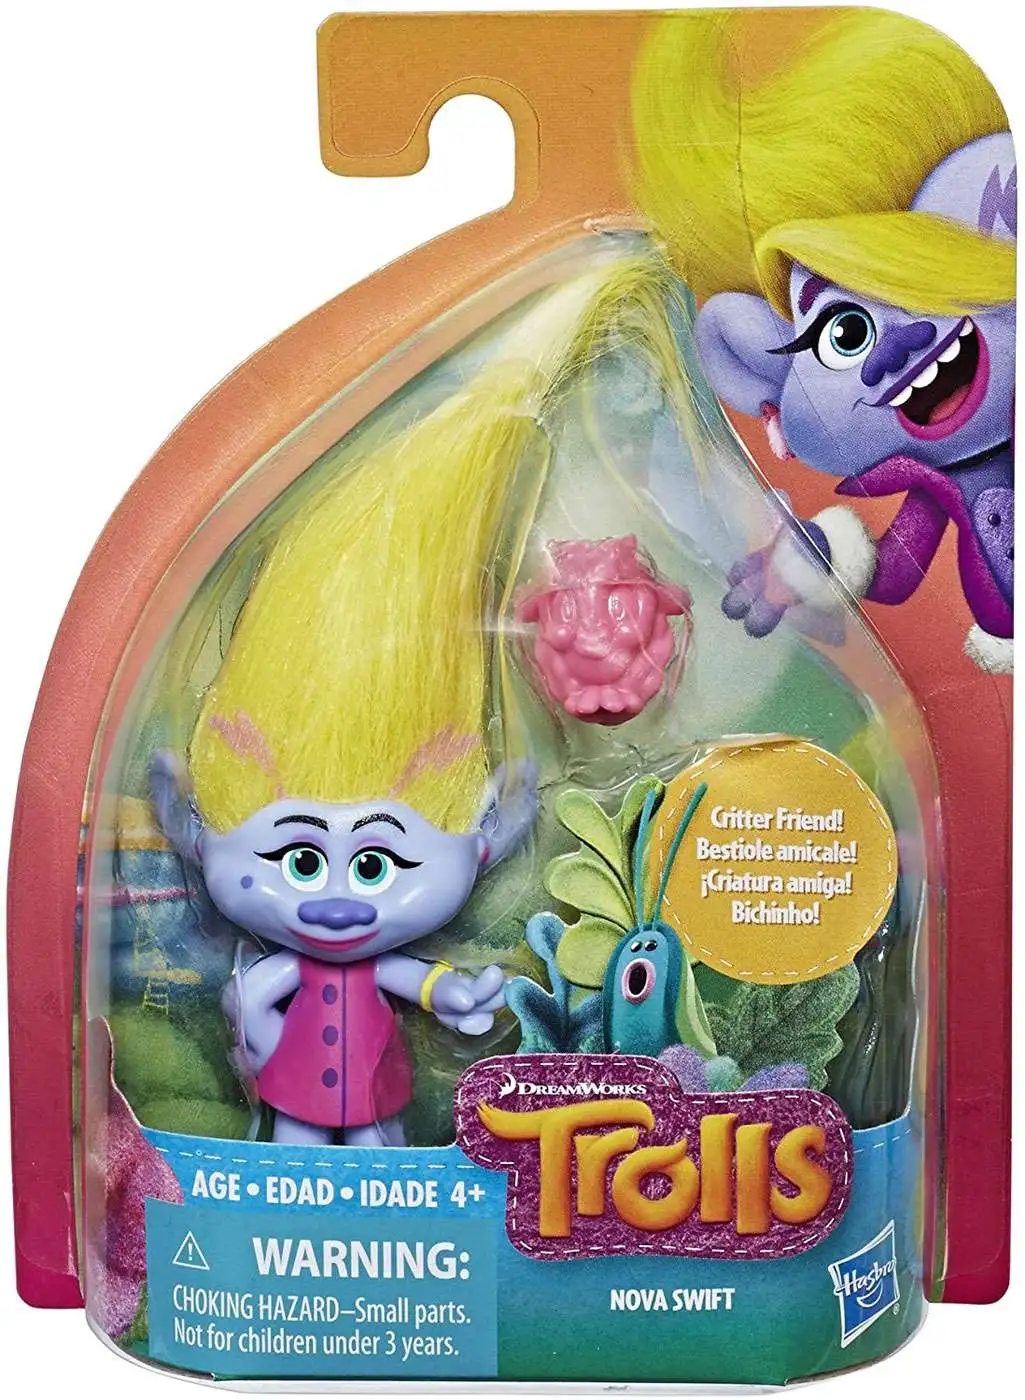 Trolls Nova Swift Figure Hasbro Toys - ToyWiz